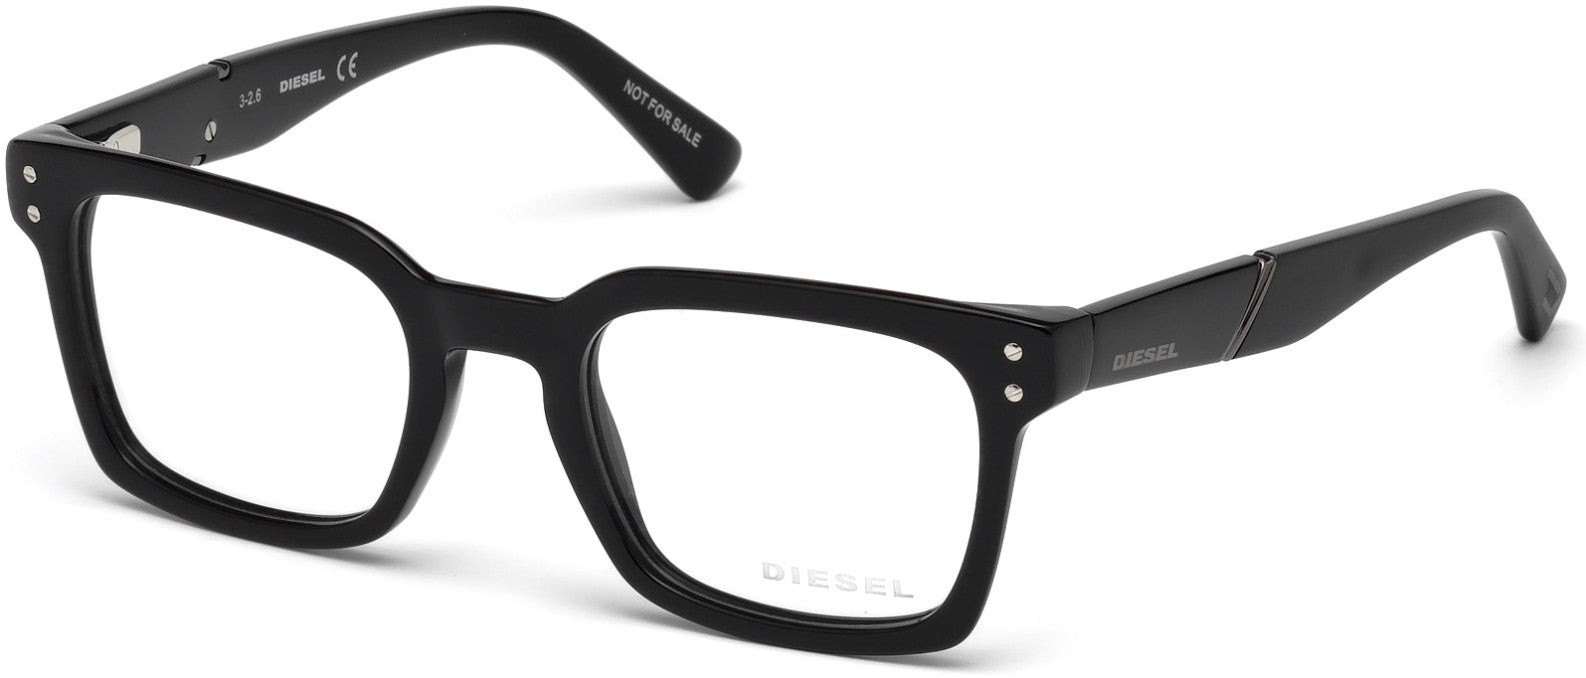 Diesel DL5229 Square Eyeglasses 001-001 - Shiny Black